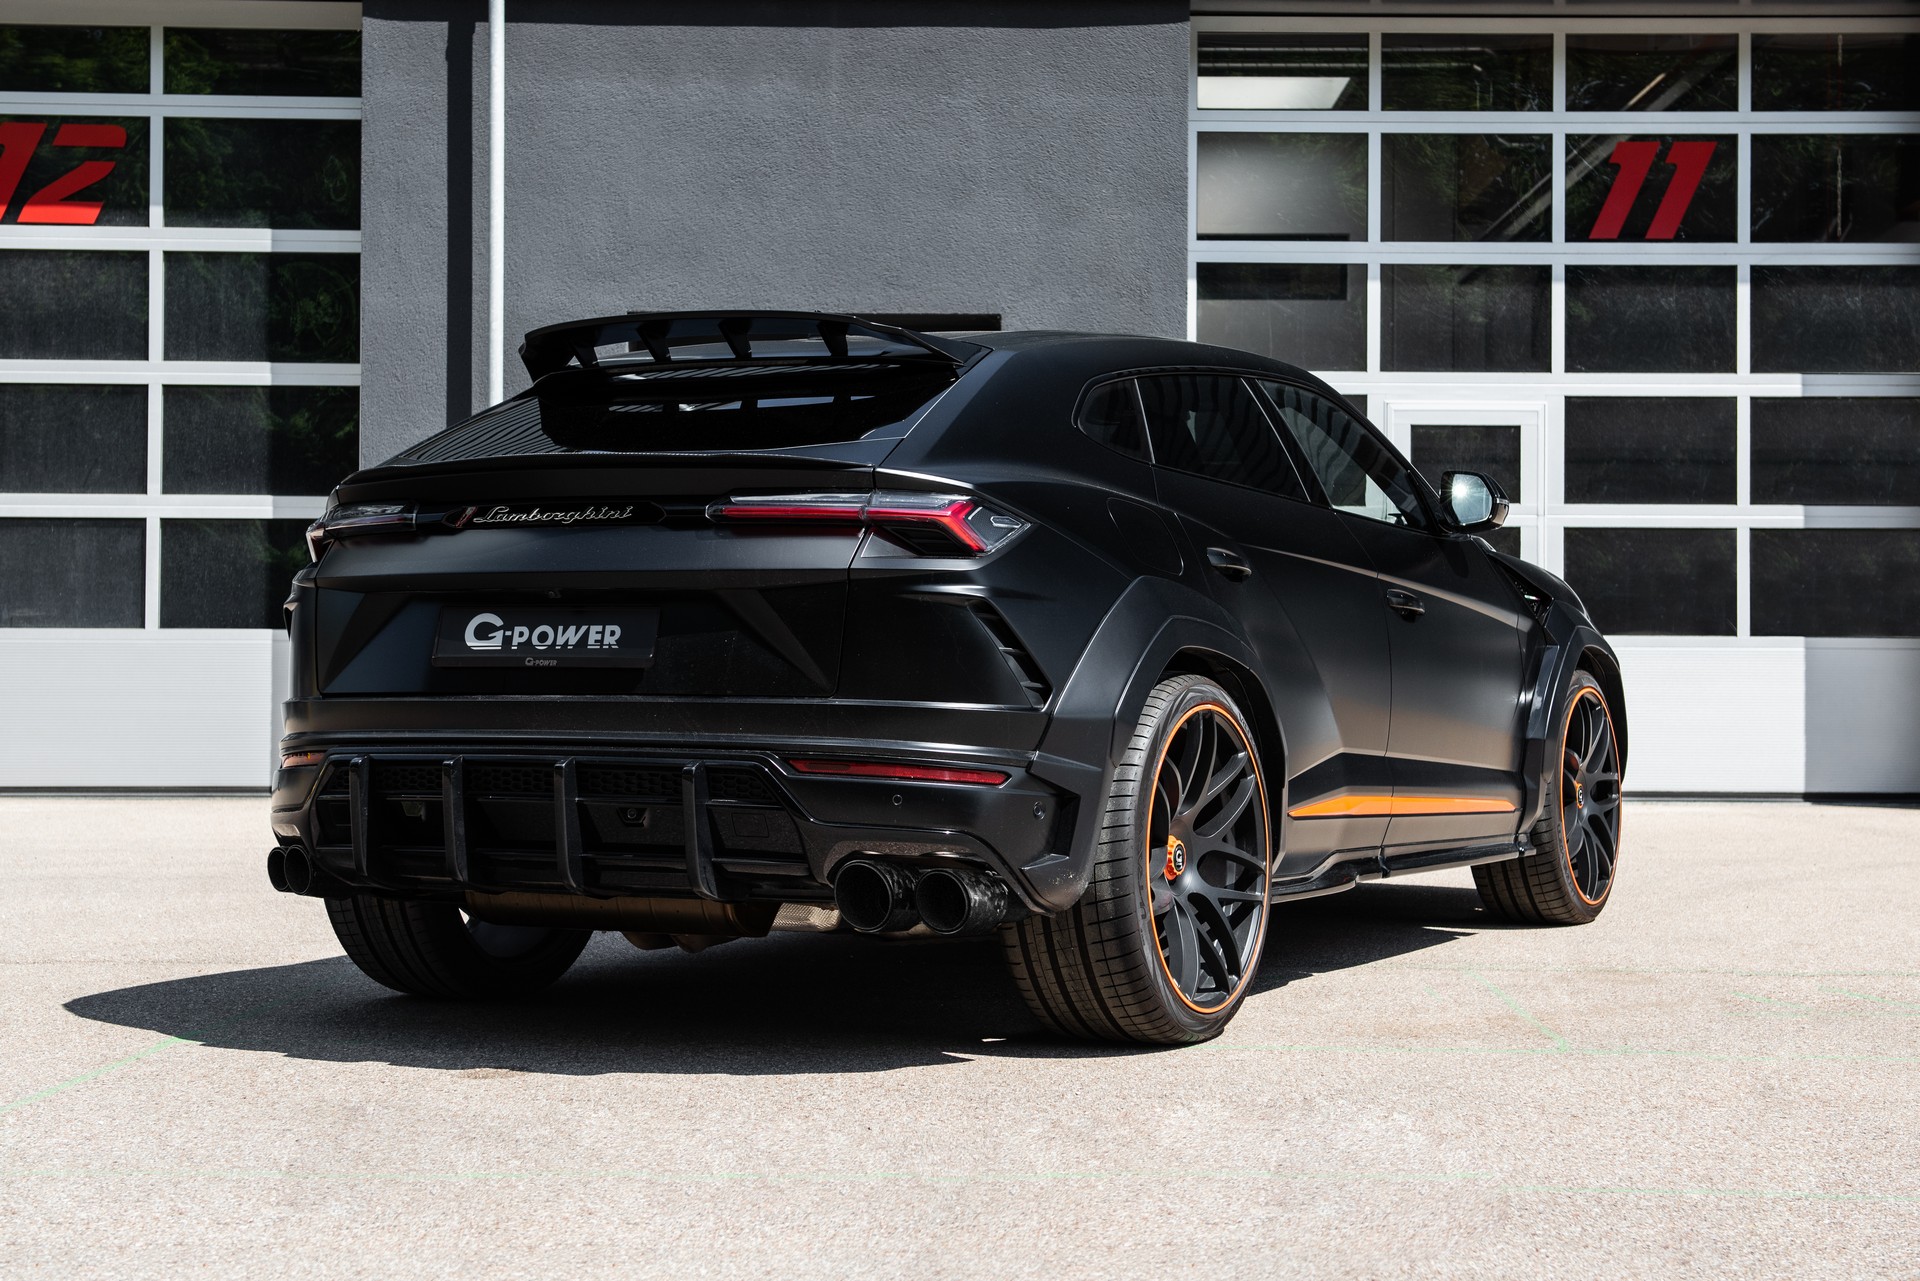 https://www.carscoops.com/wp-content/uploads/2022/08/G-Power-Lamborghini-Urus-8.jpg